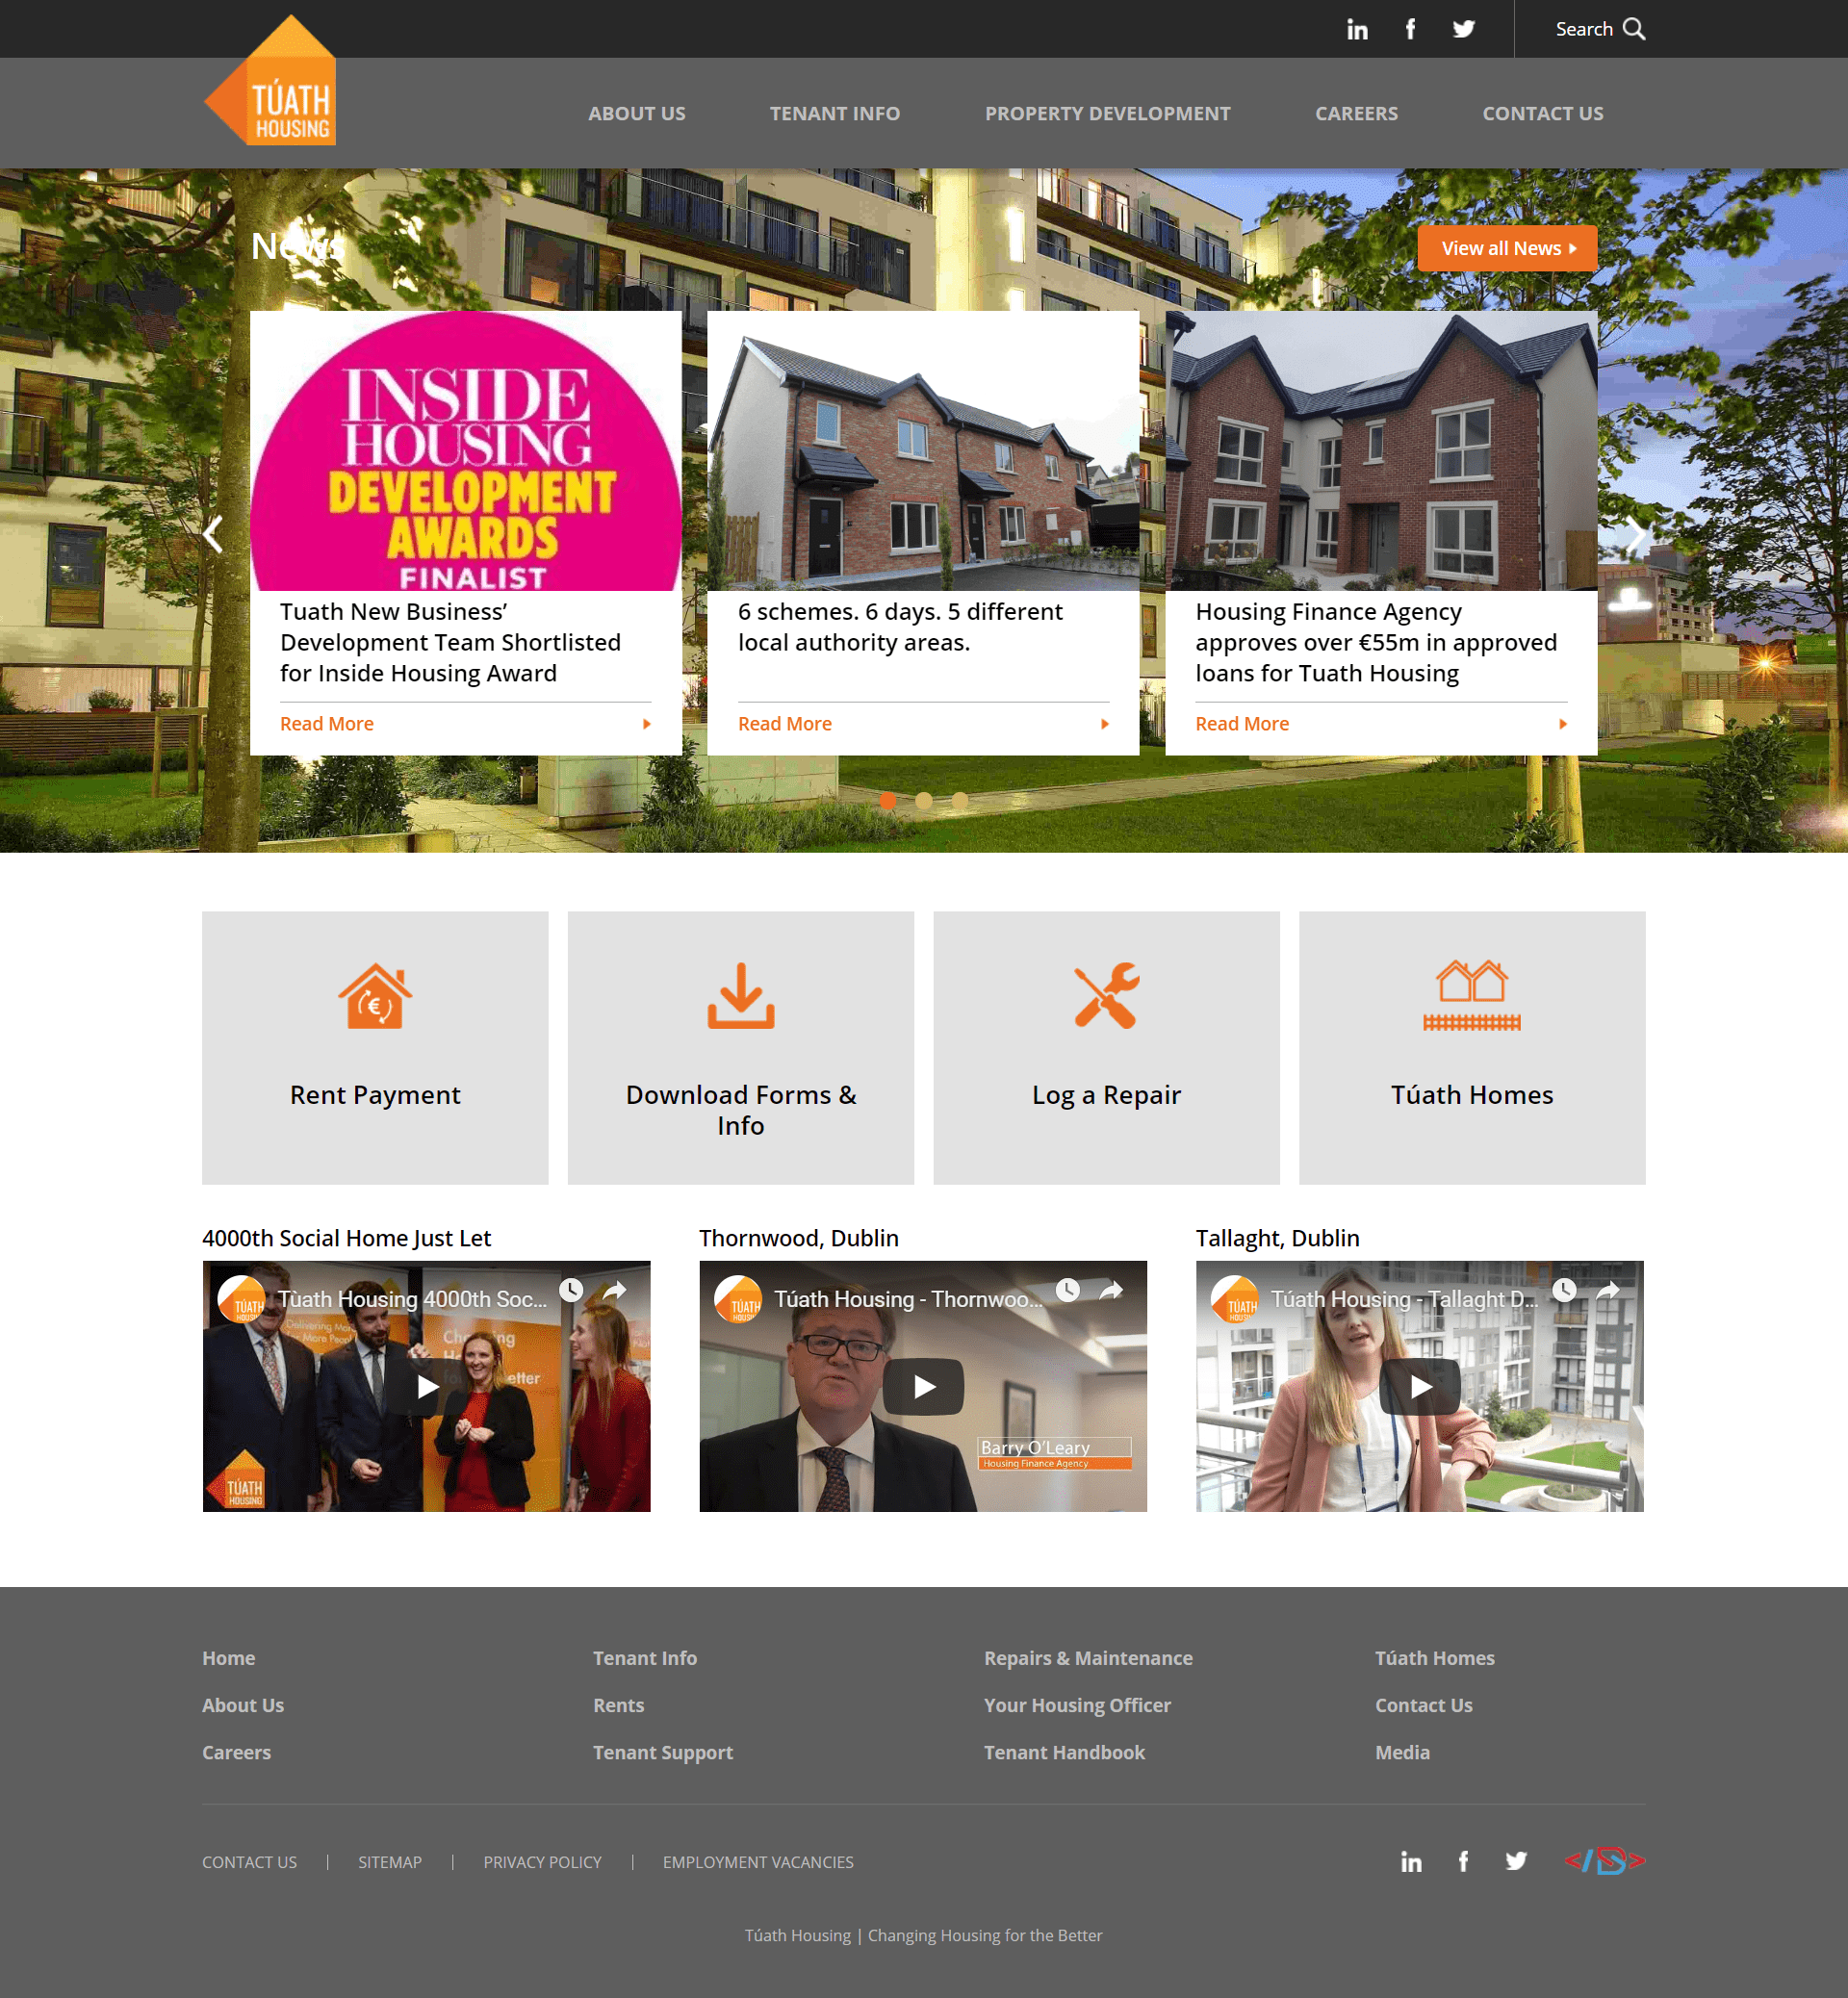 World Class Web Design – Digital Sales launch new website for Túath Housing